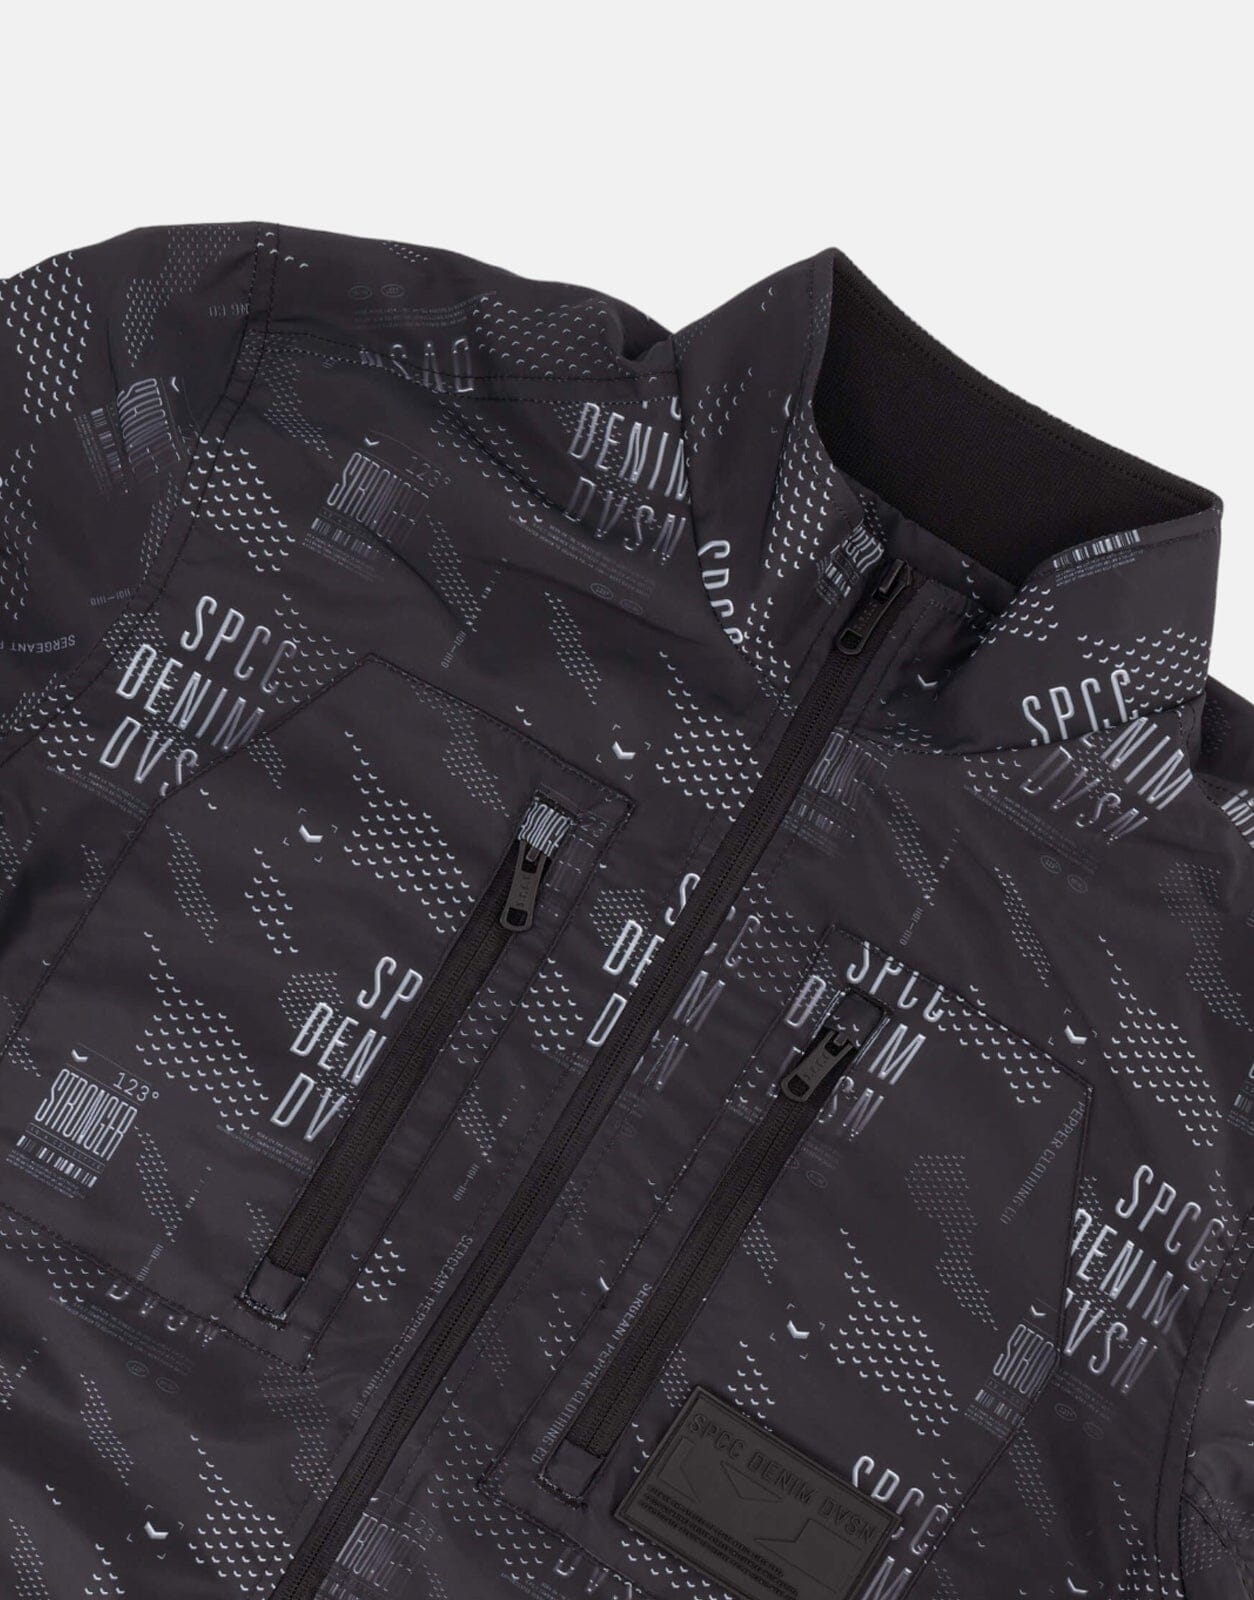 SPCC Maddox Black Jacket - Subwear